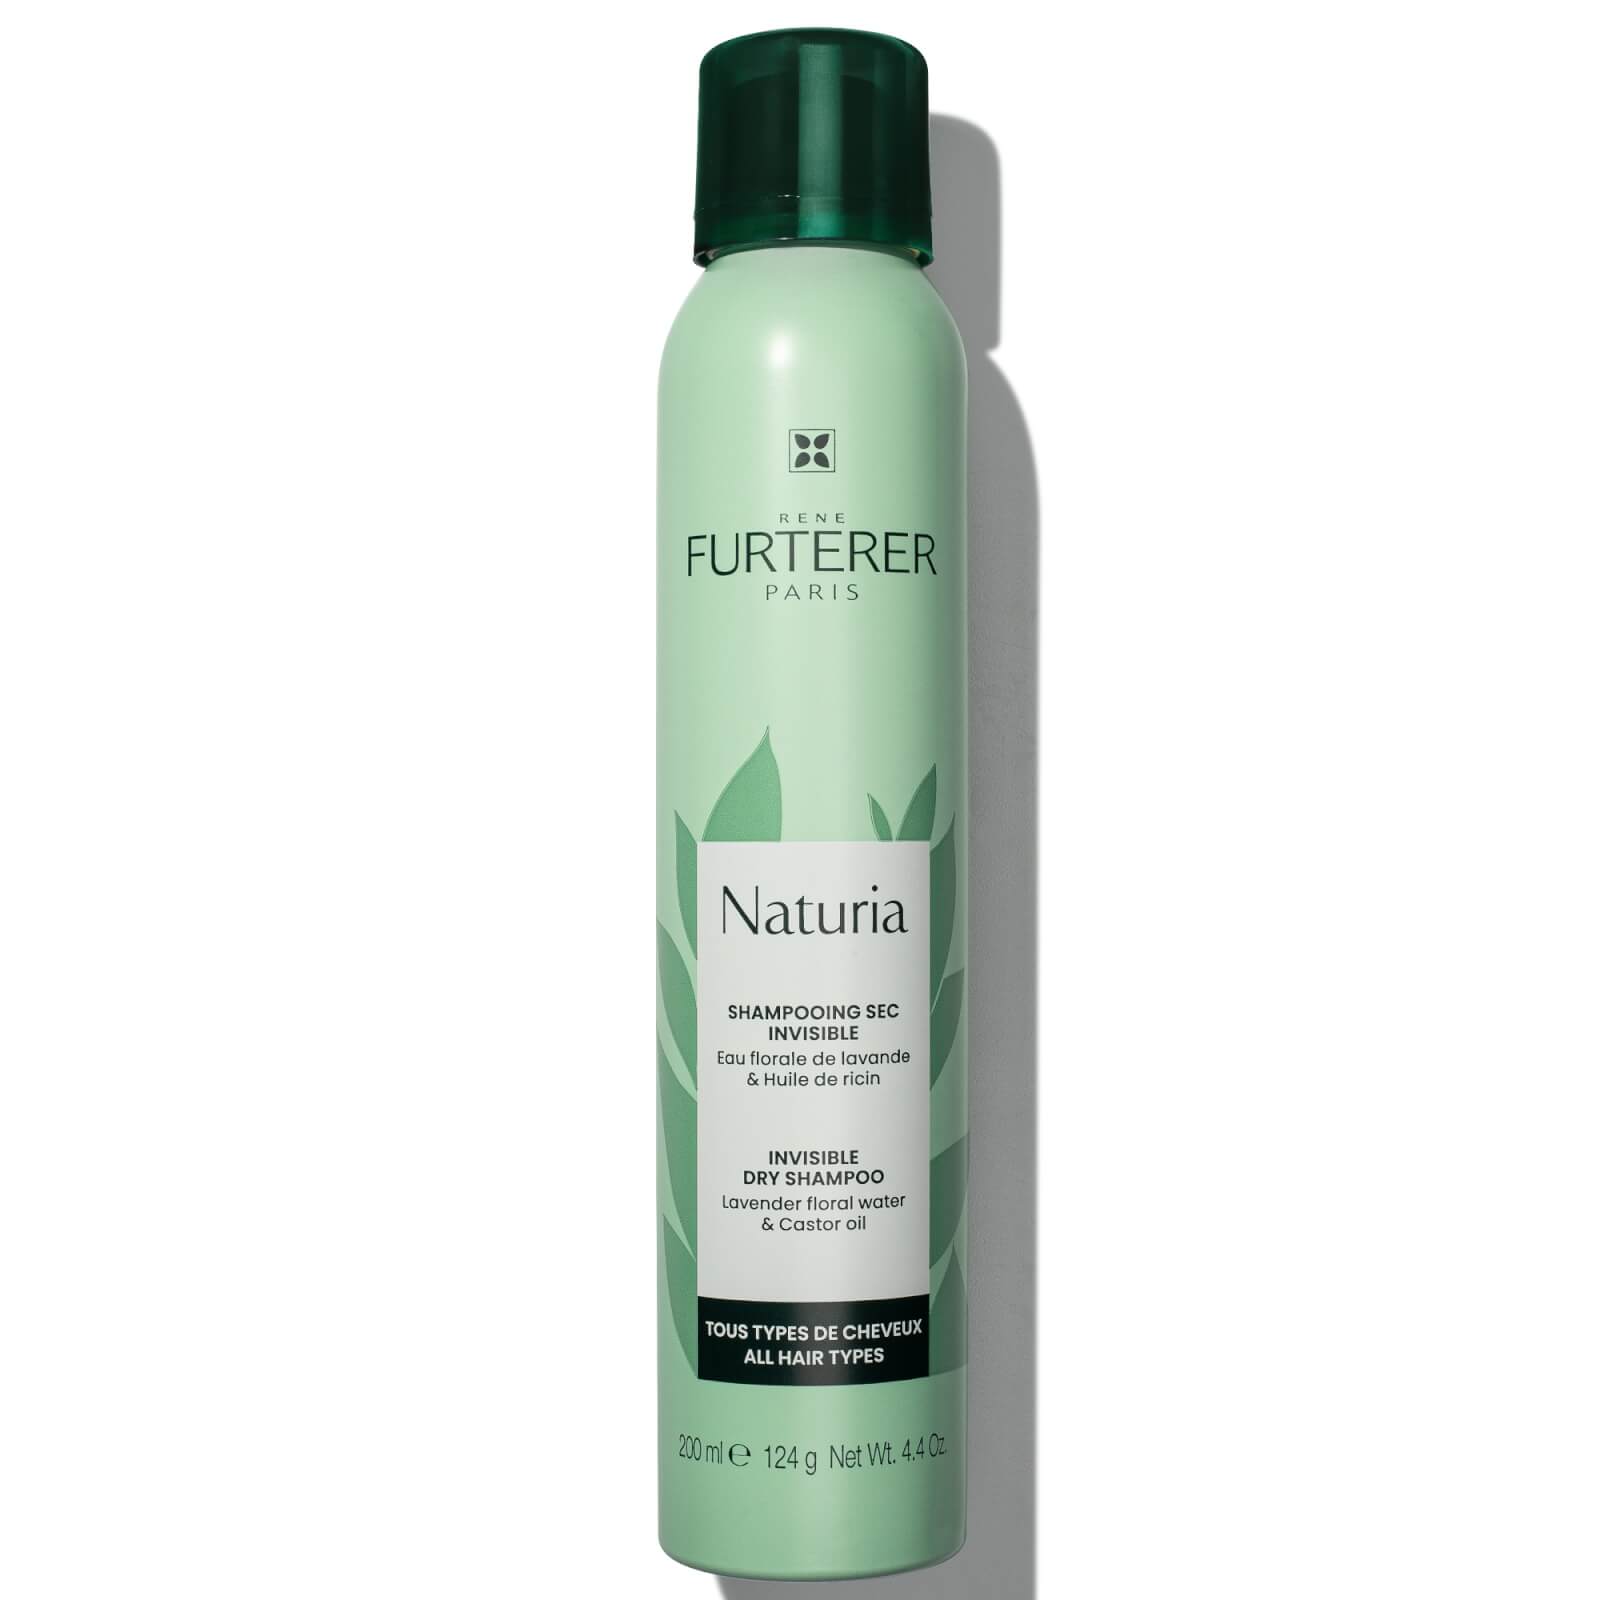 René Furterer Naturia Invisible Dry Shampoo 6.7 fl. oz product